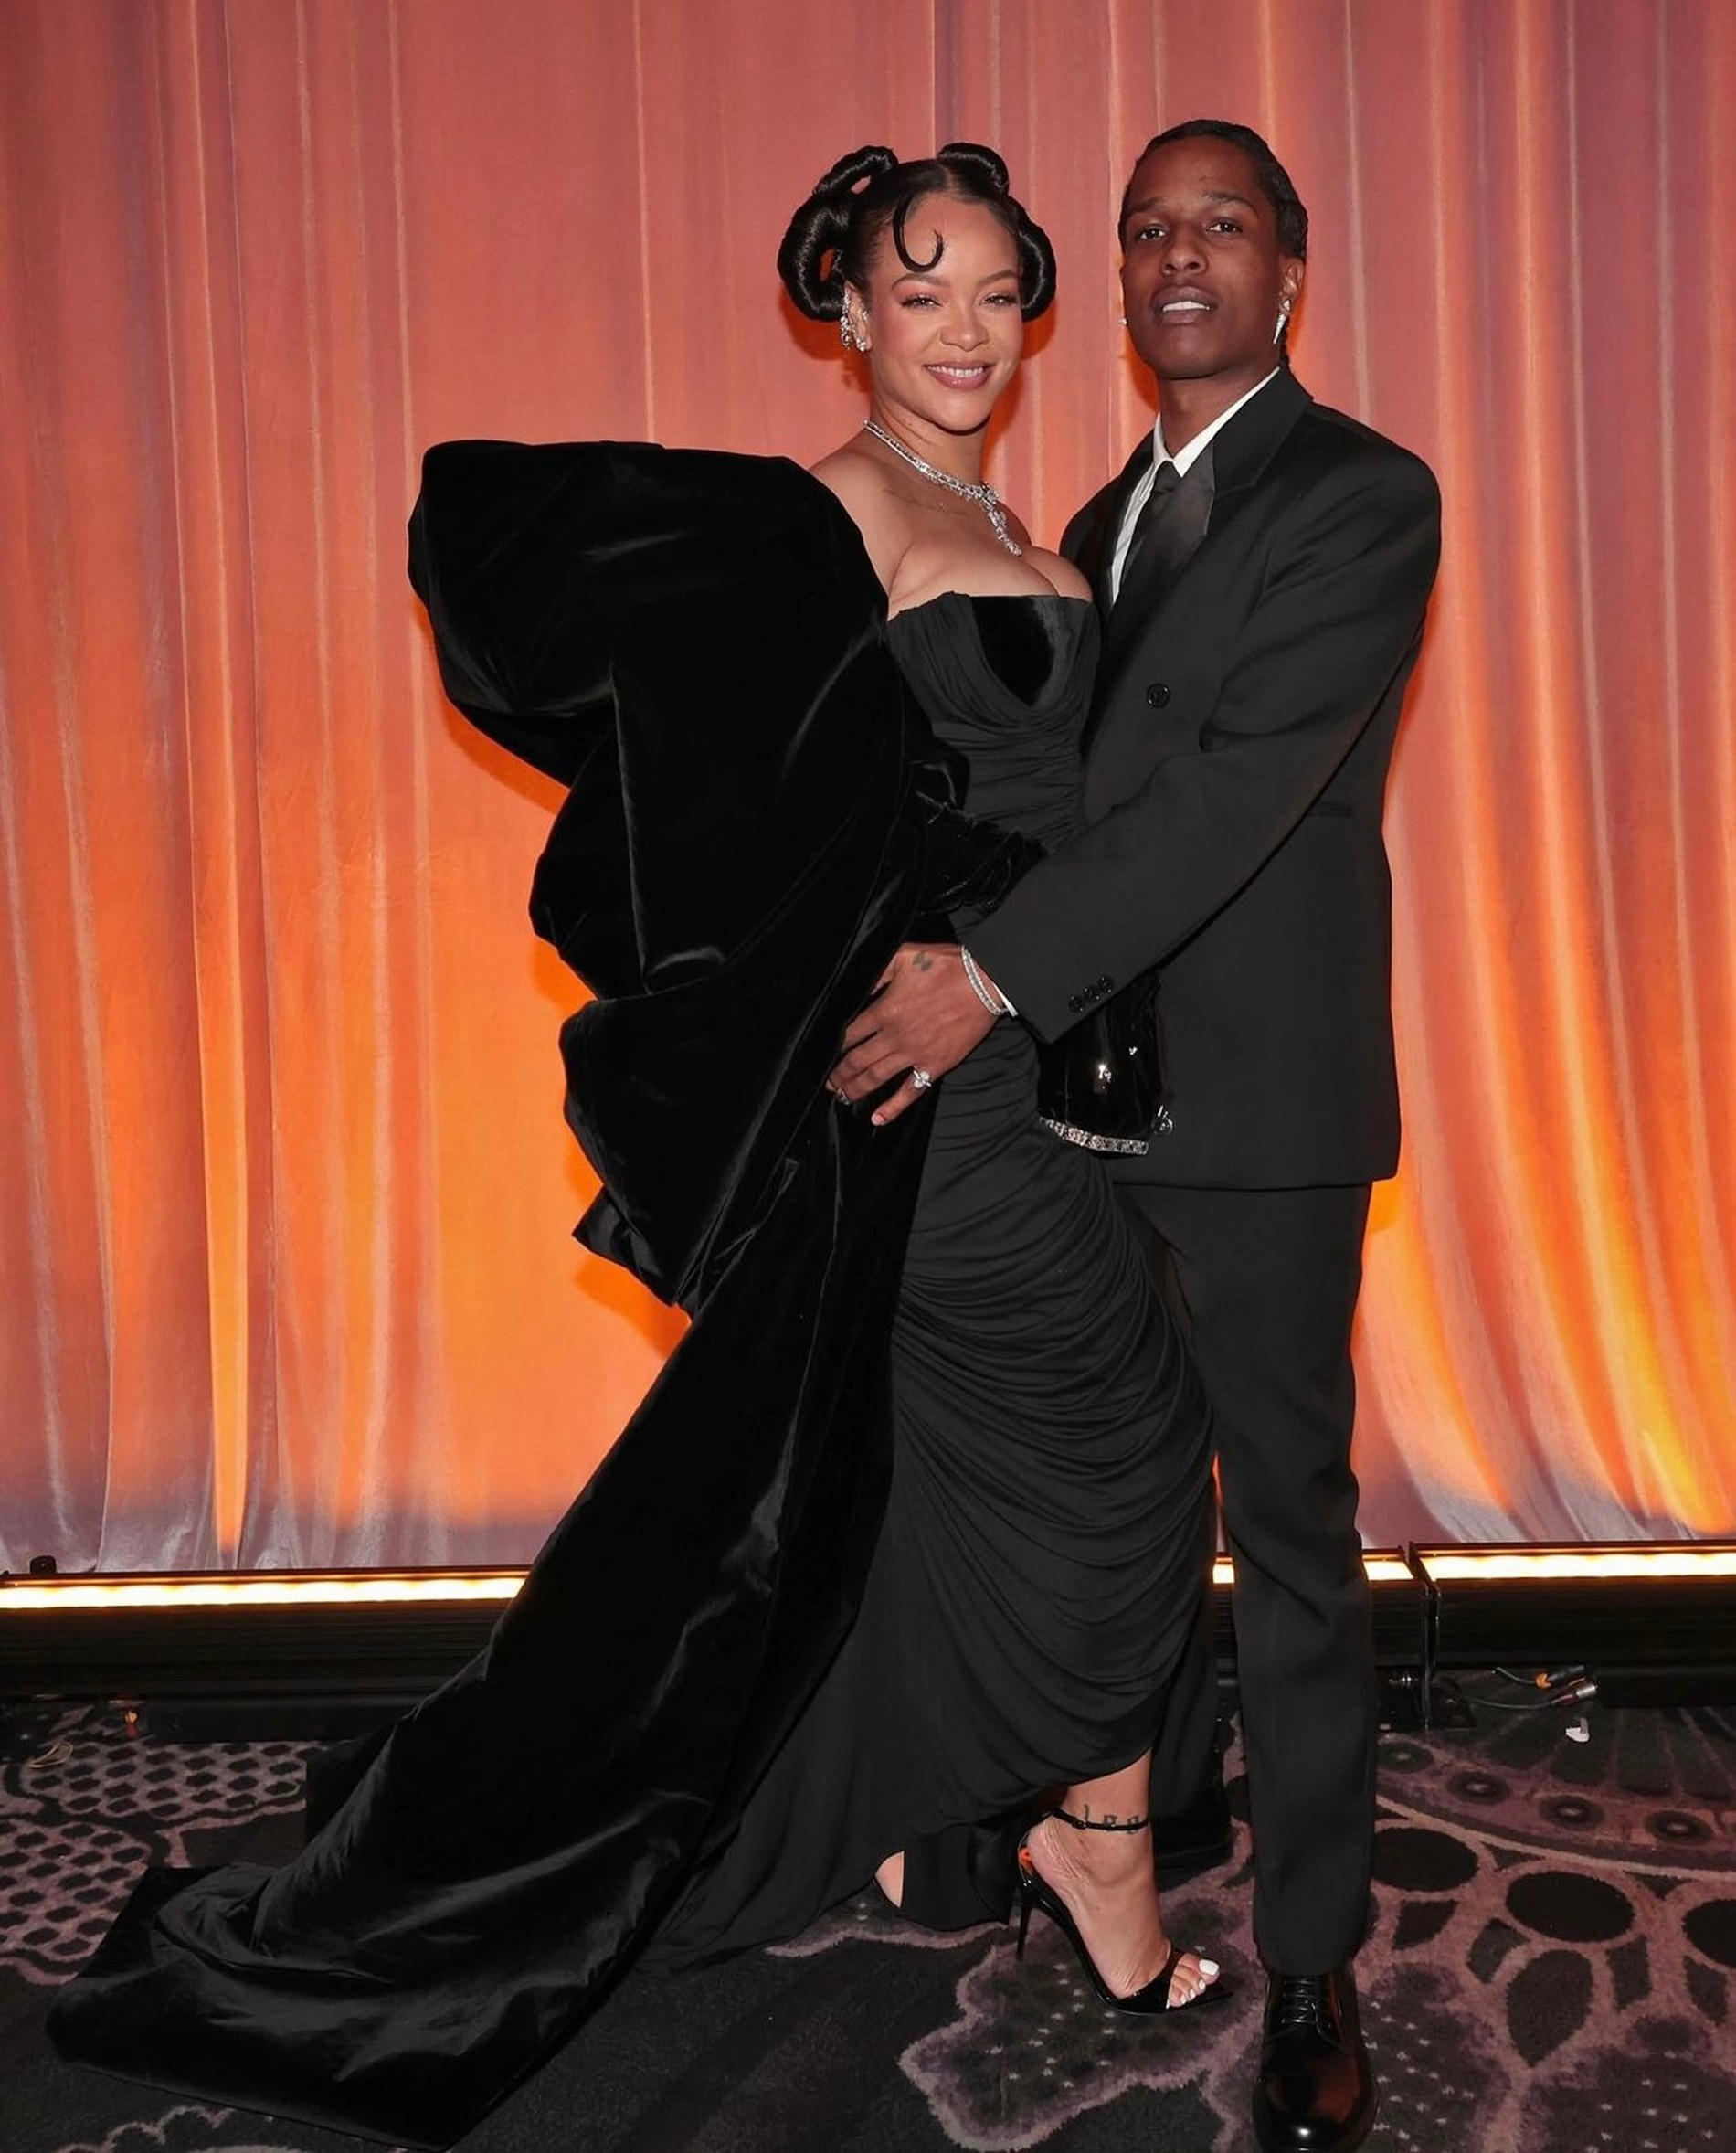 Рианна и ASAP Rocky на премии «Золотой глобус»
Фото: Getty Images